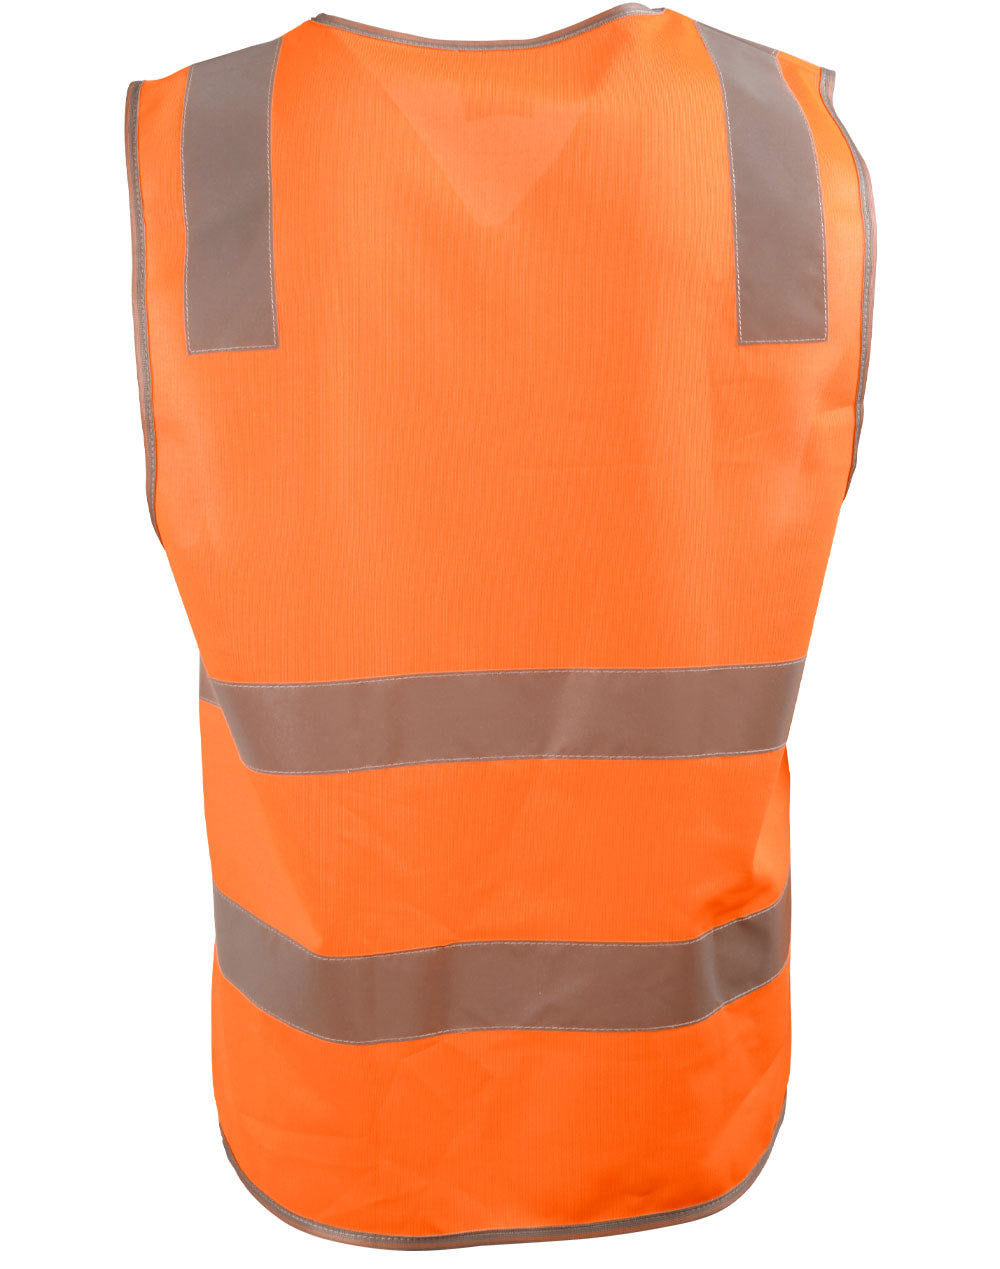 AIW SW43 safety vest with shoulder tapes